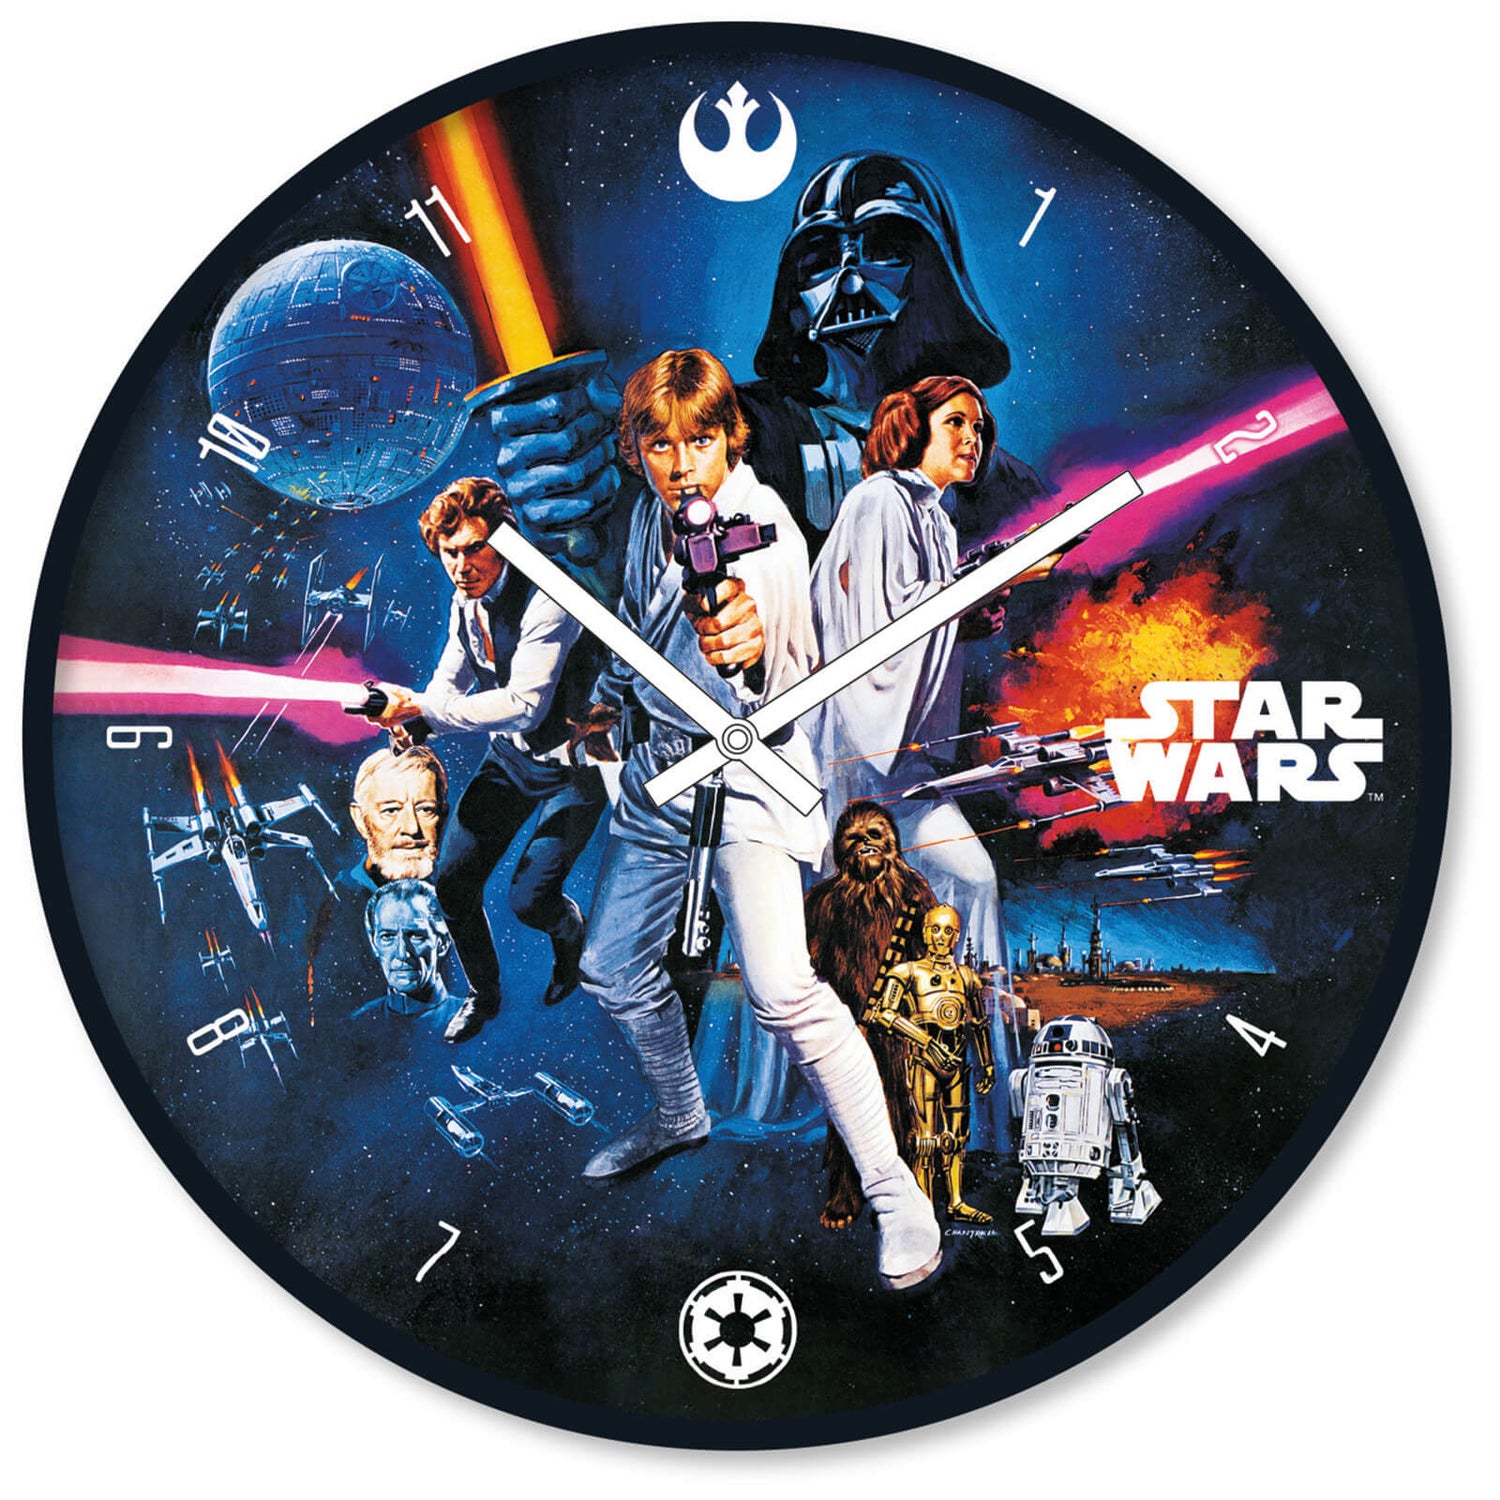 Star Wars (A New Hope Poster) Wall Clocks